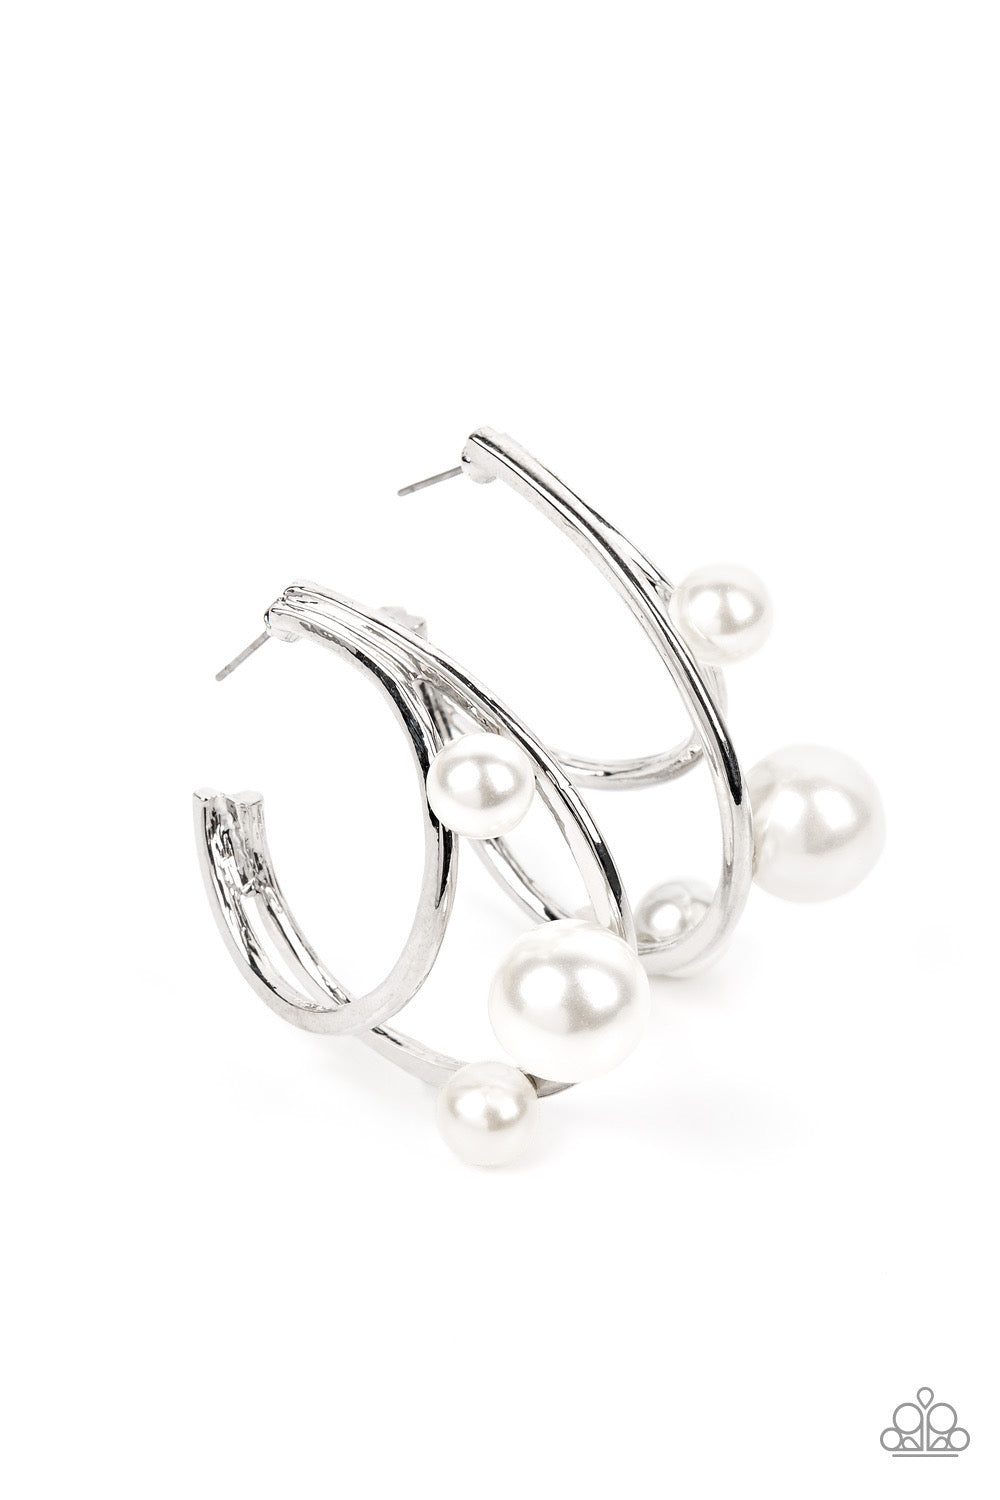 Paparazzi Metro Pier - White Earrings - Pearl Earring Paparazzi jewelry images